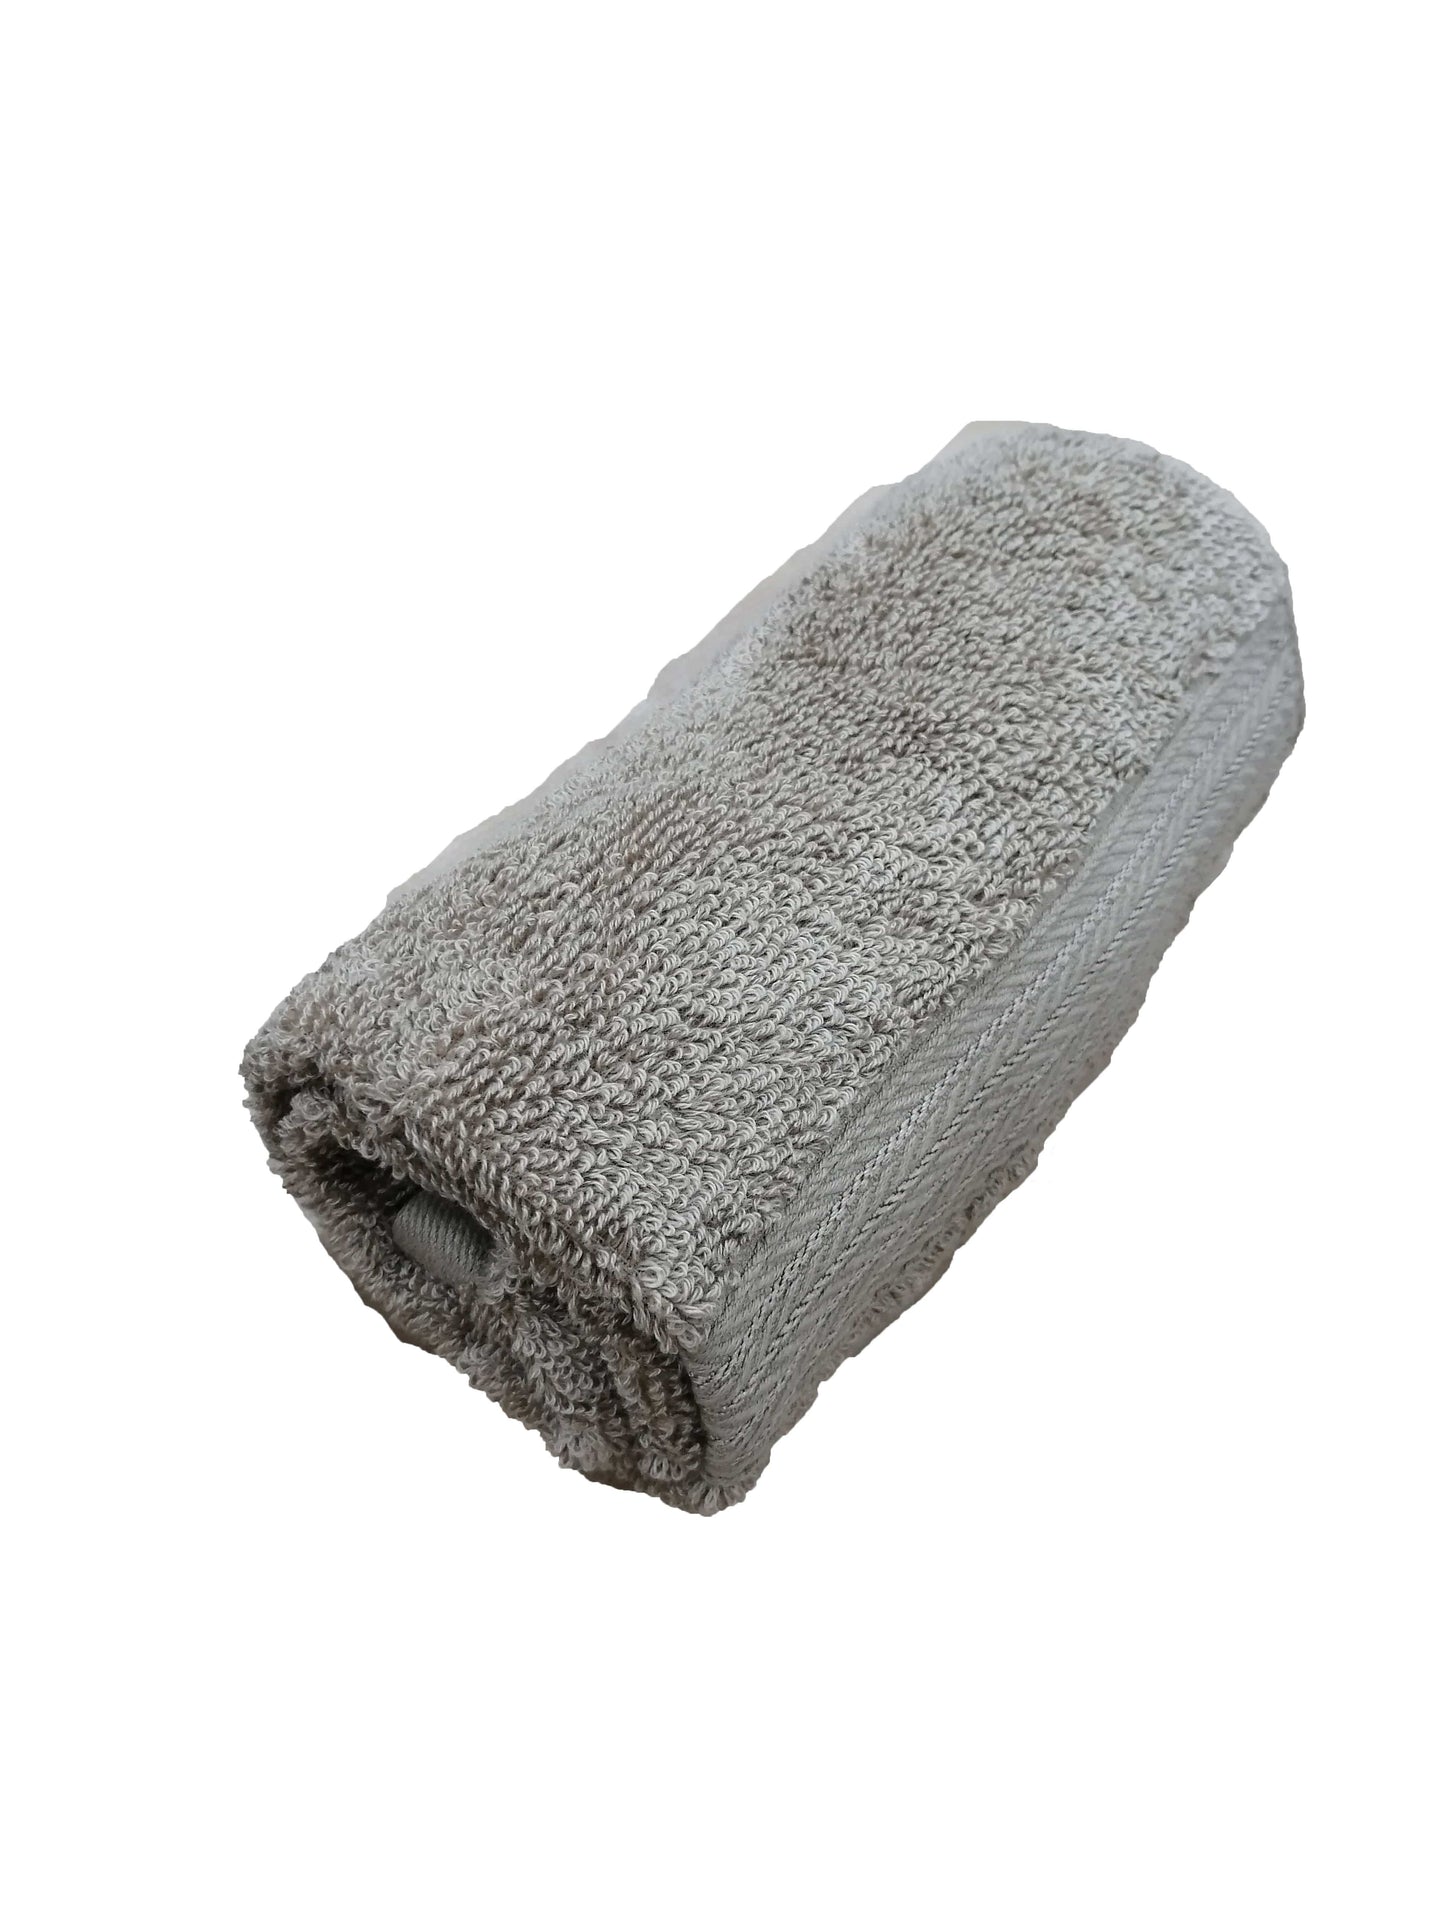 Home Accents Towels 46 cm x 71 cm / Kakki Home Accents - Microfiber Hand Towel